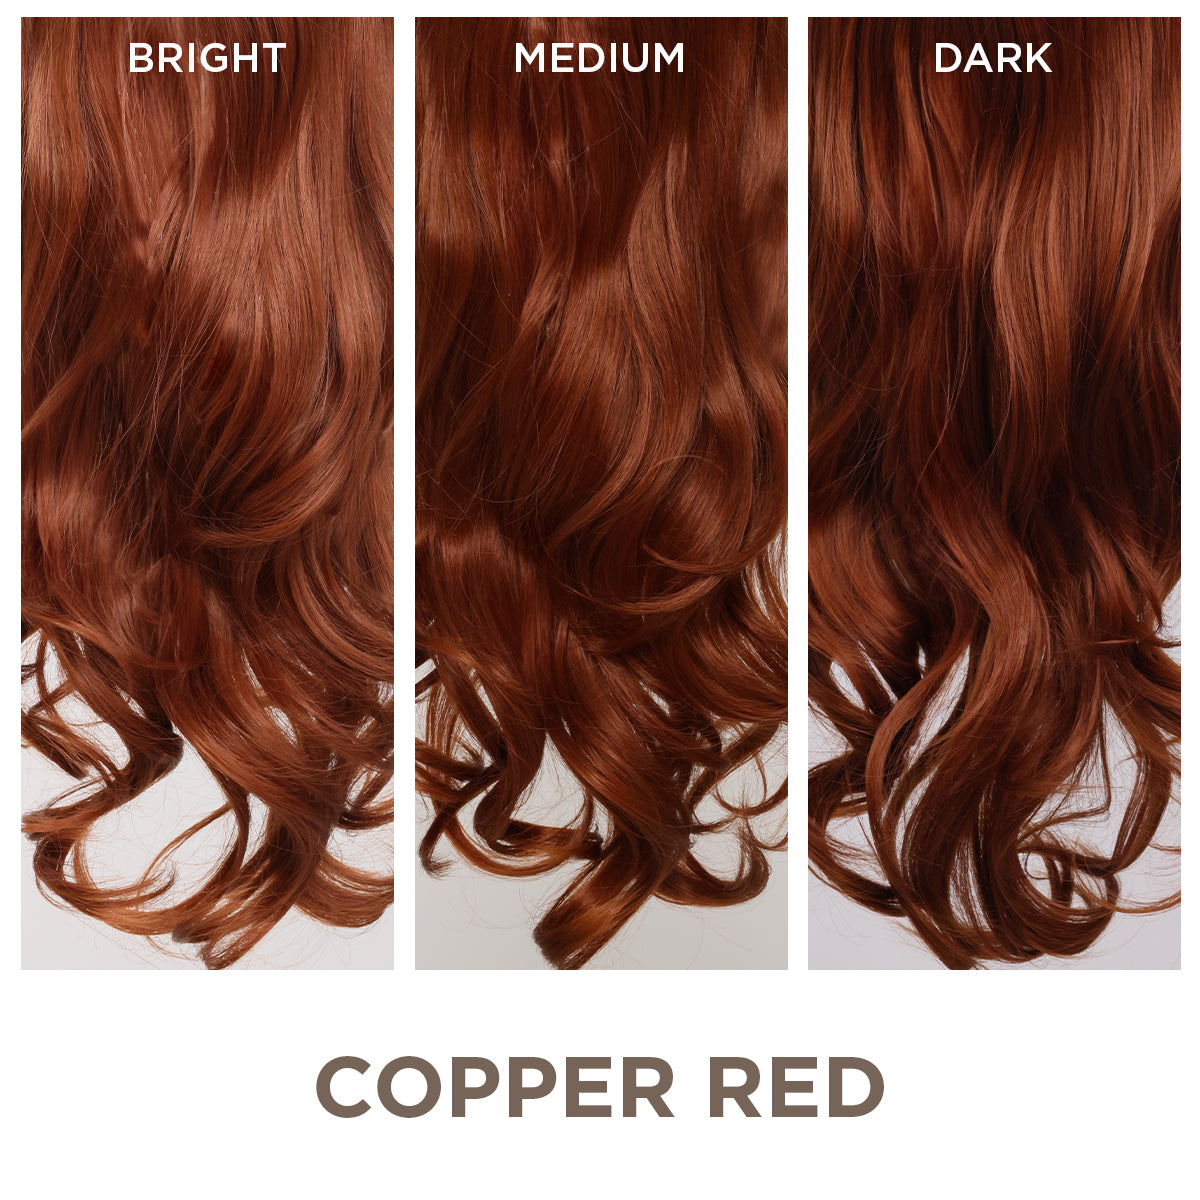 Copper Red + 1 FREE HALO